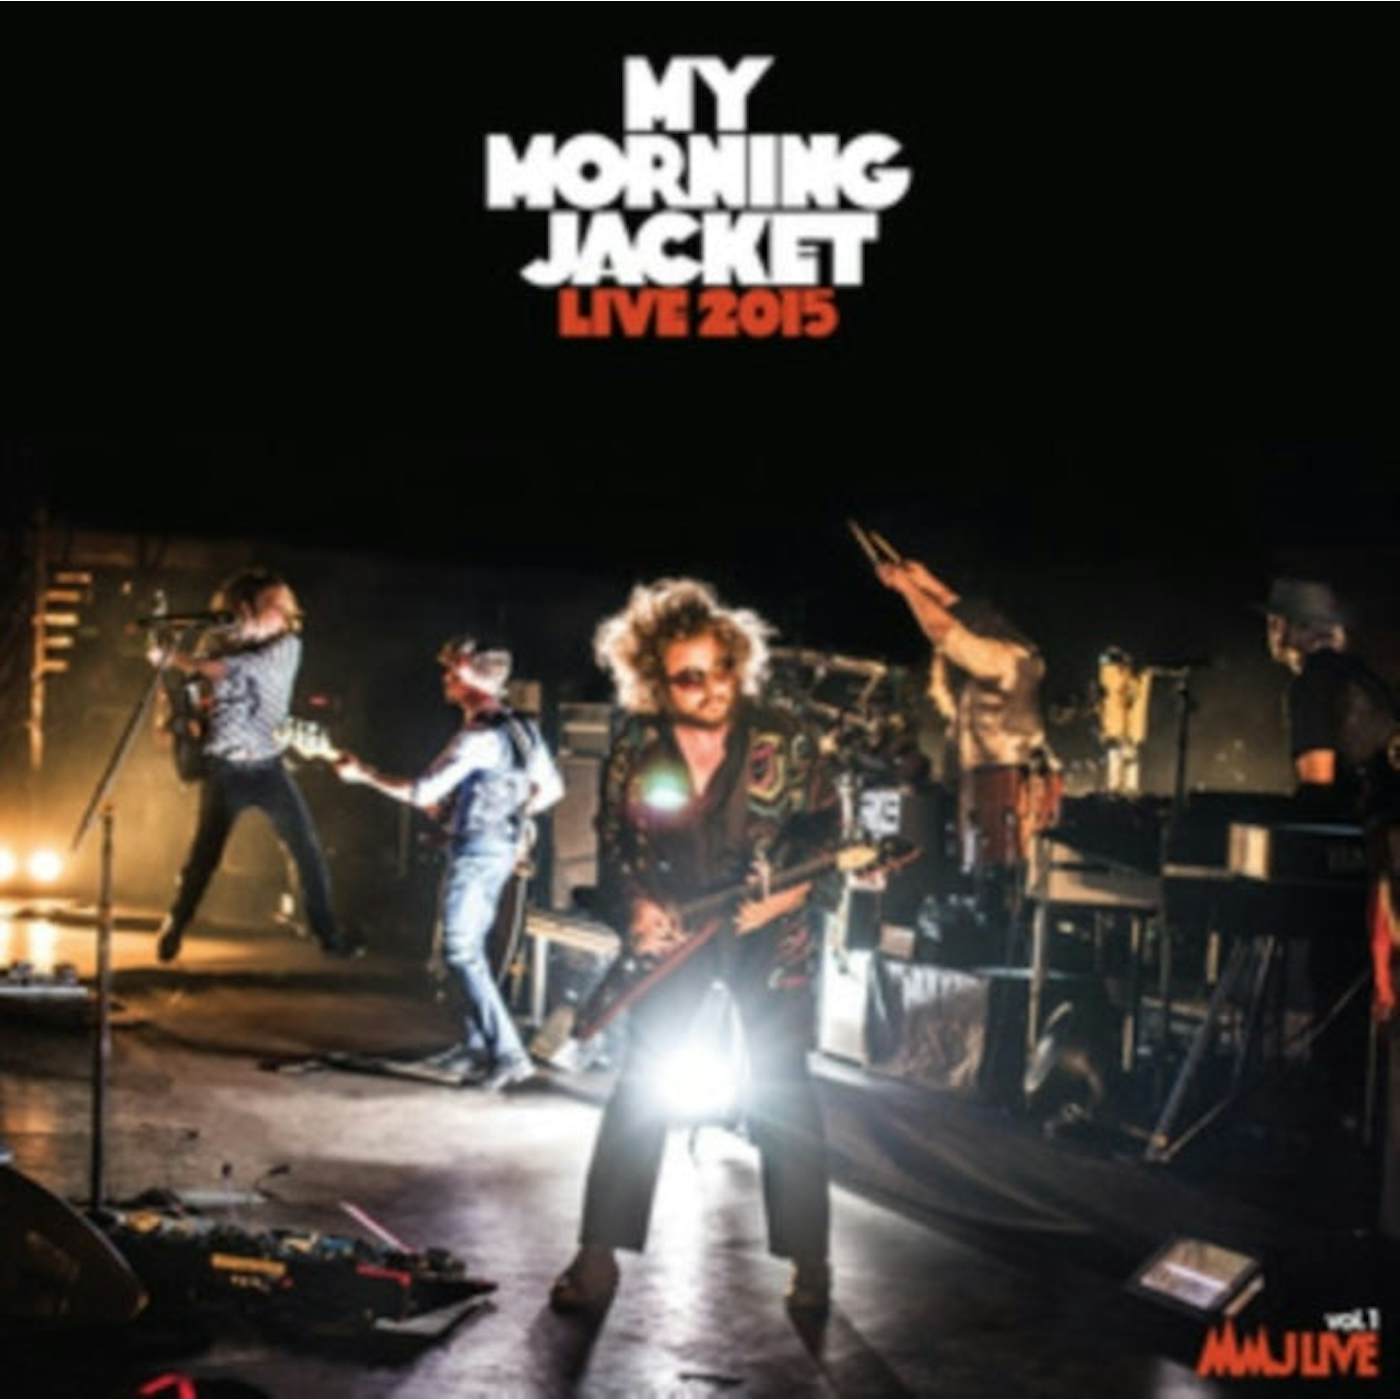  MY MORNING JACKET LP - LIVE 2015